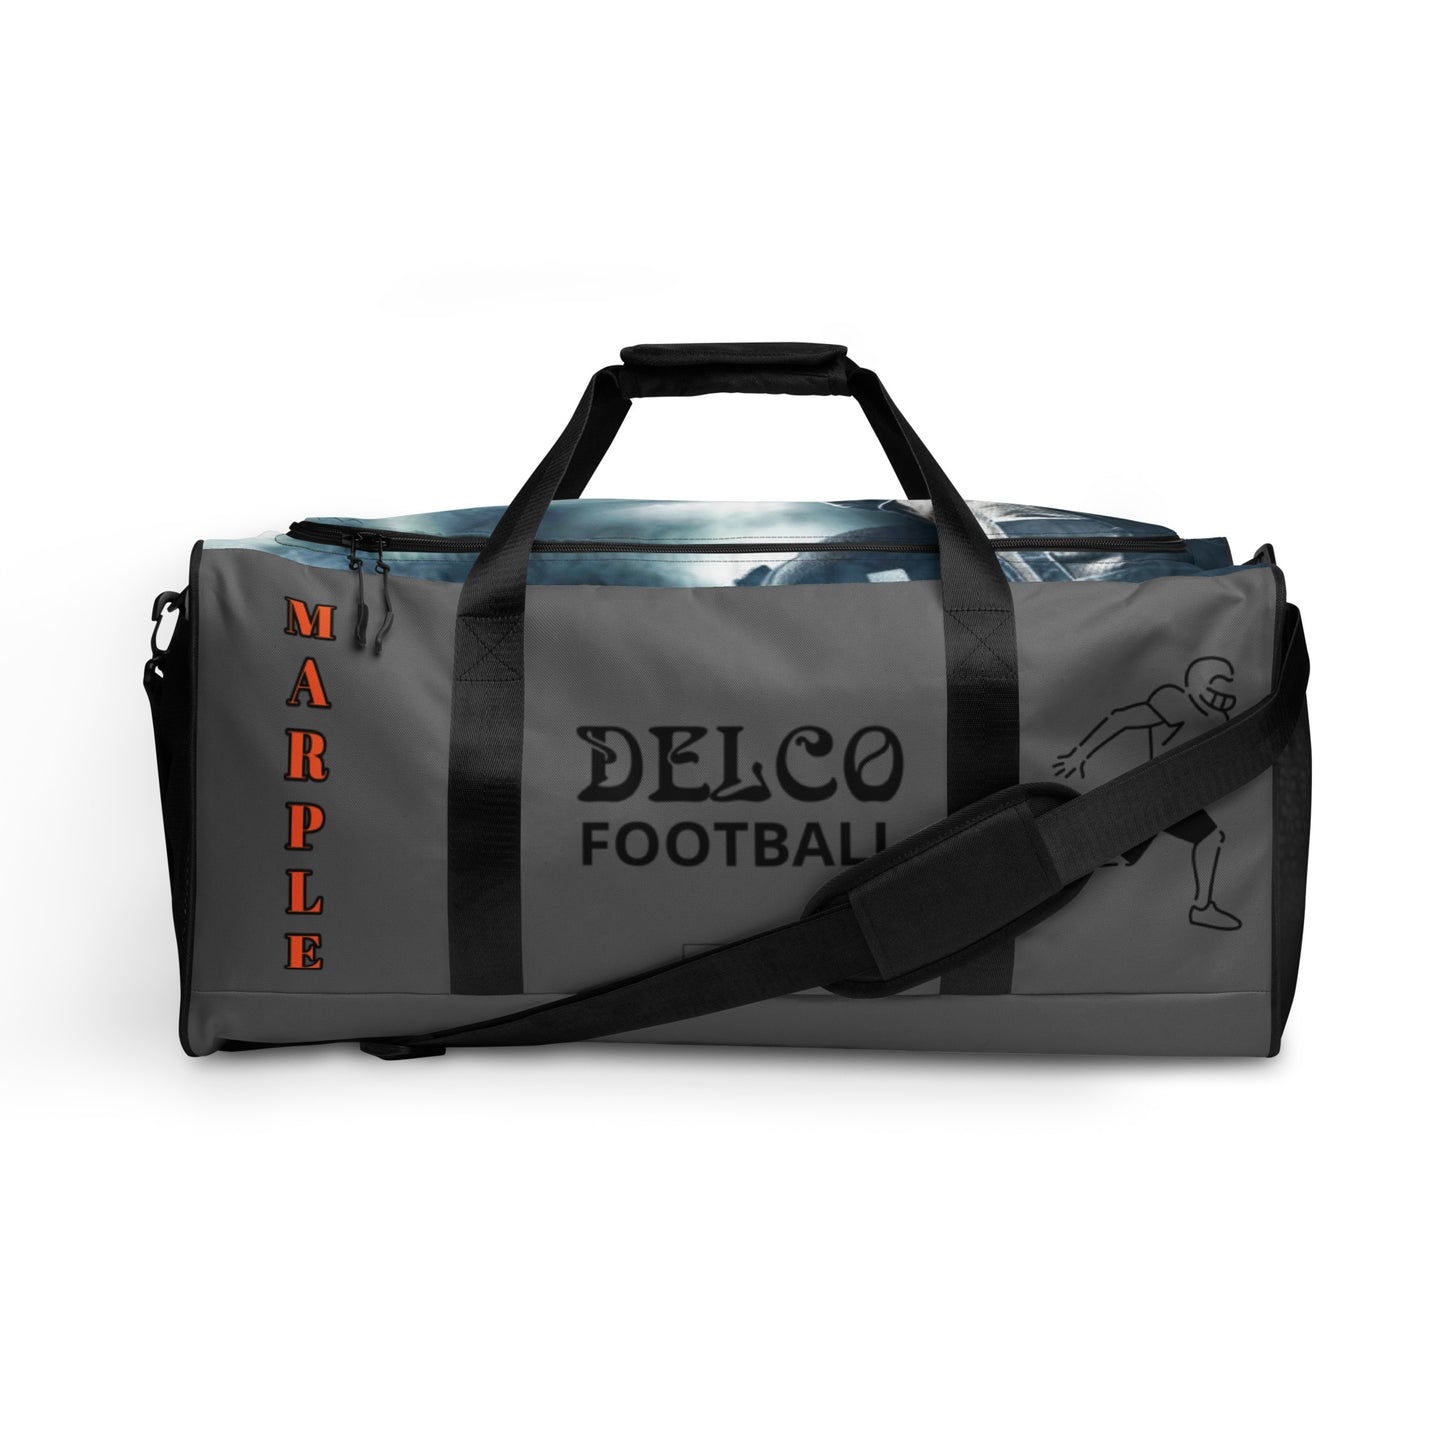 DELCO Marple 954 Duffle bag